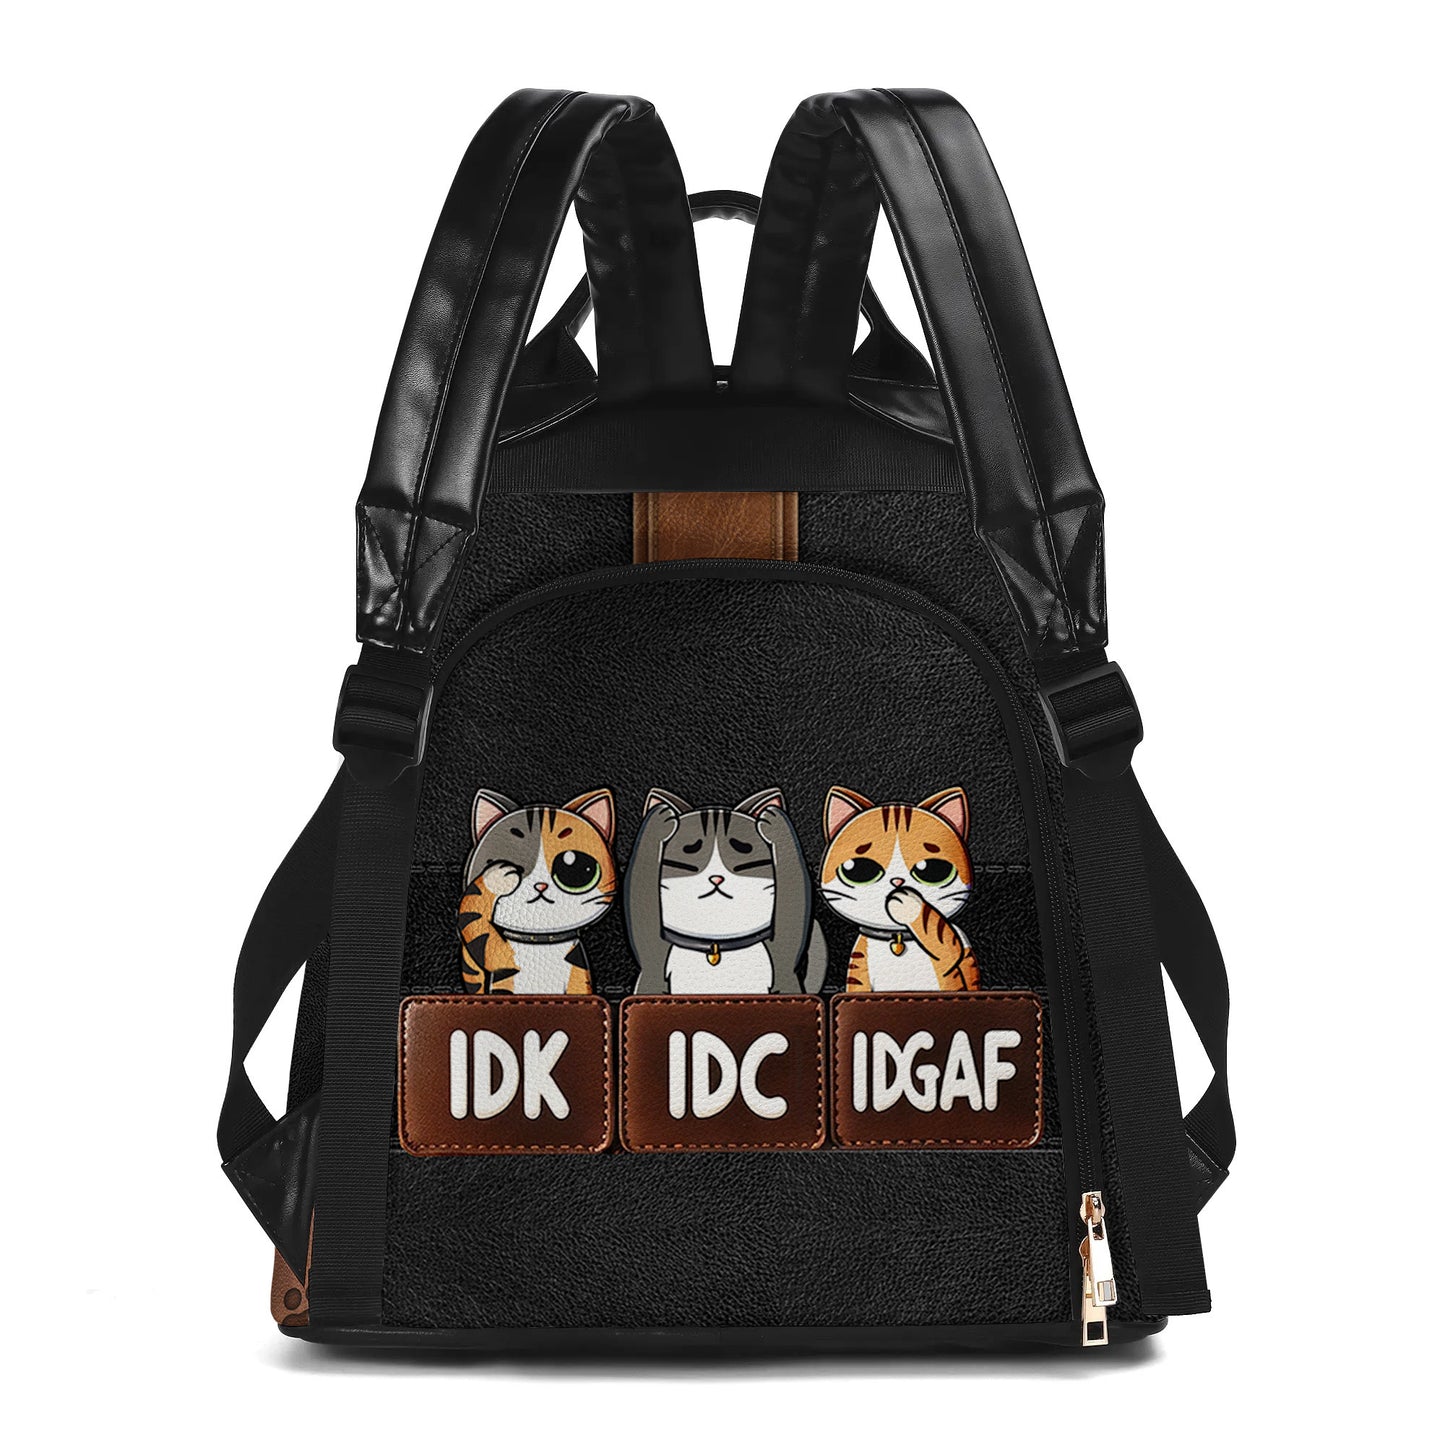 Atascado entre IDK, IDC e IDGAF - Mochila de cuero personalizada - BP_CAT04